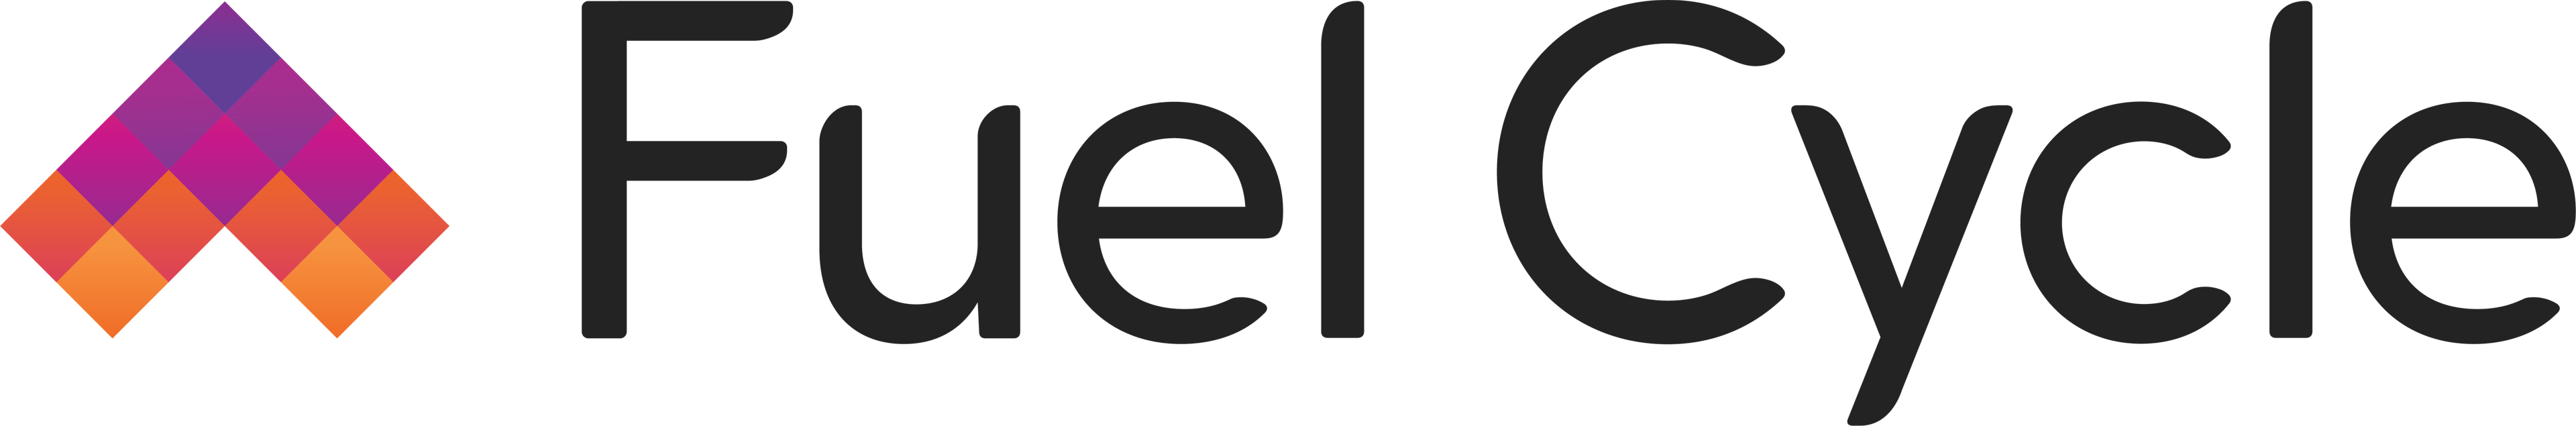 Fuel Cycle Logo